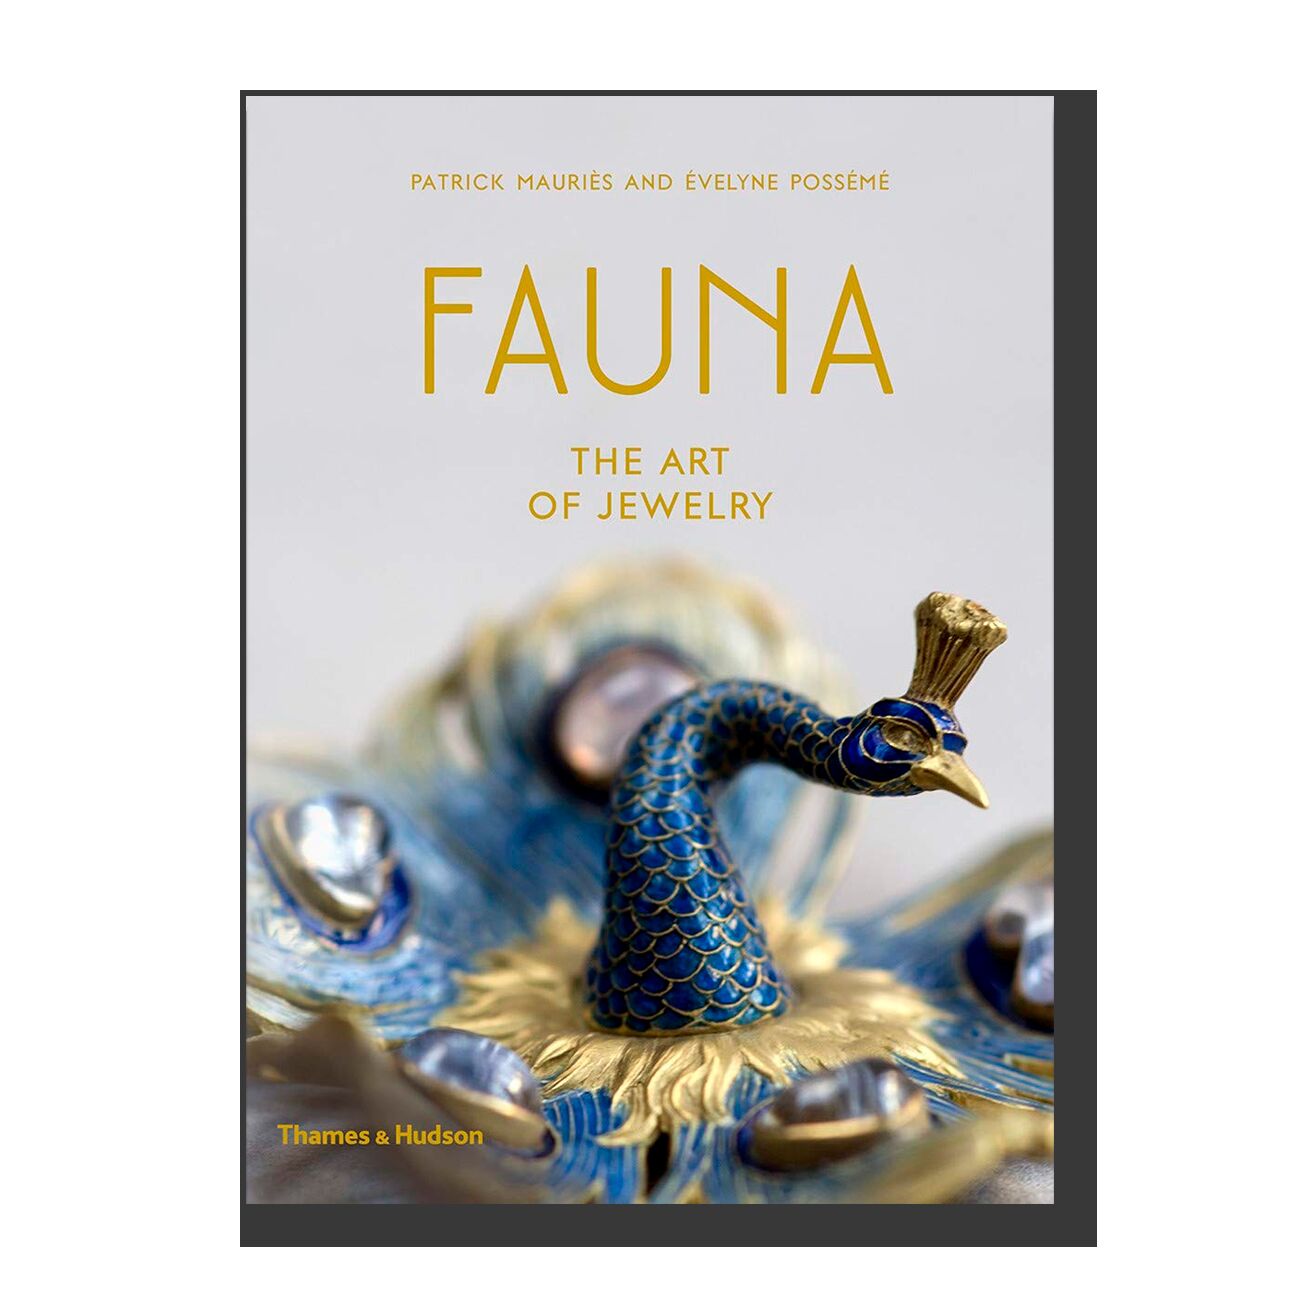 Fauna: The Art of Jewelry